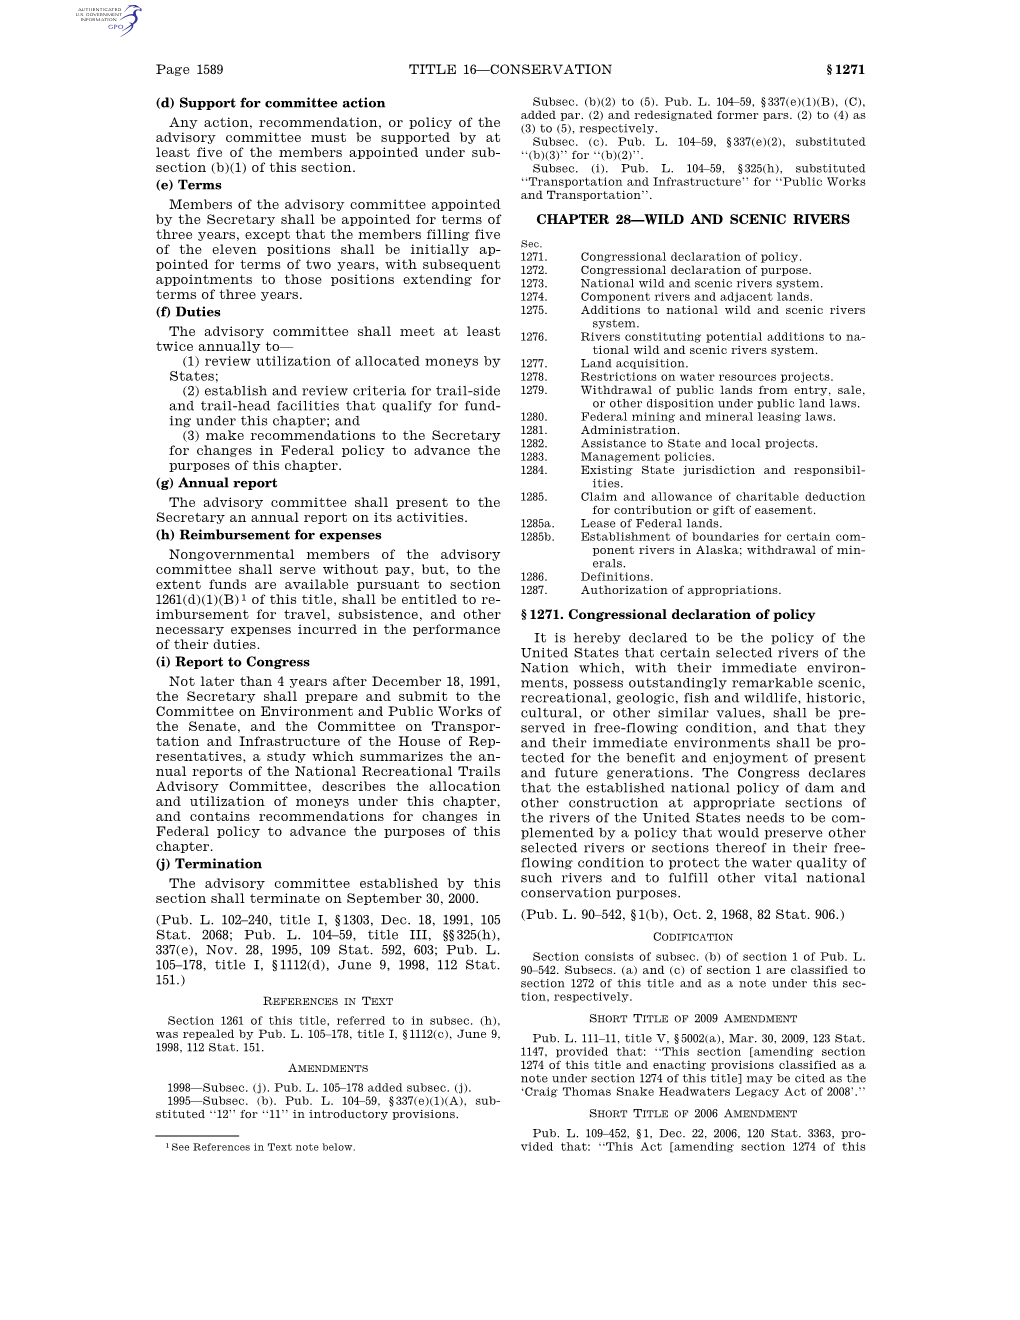 Page 1589 TITLE 16—CONSERVATION § 1271 (D